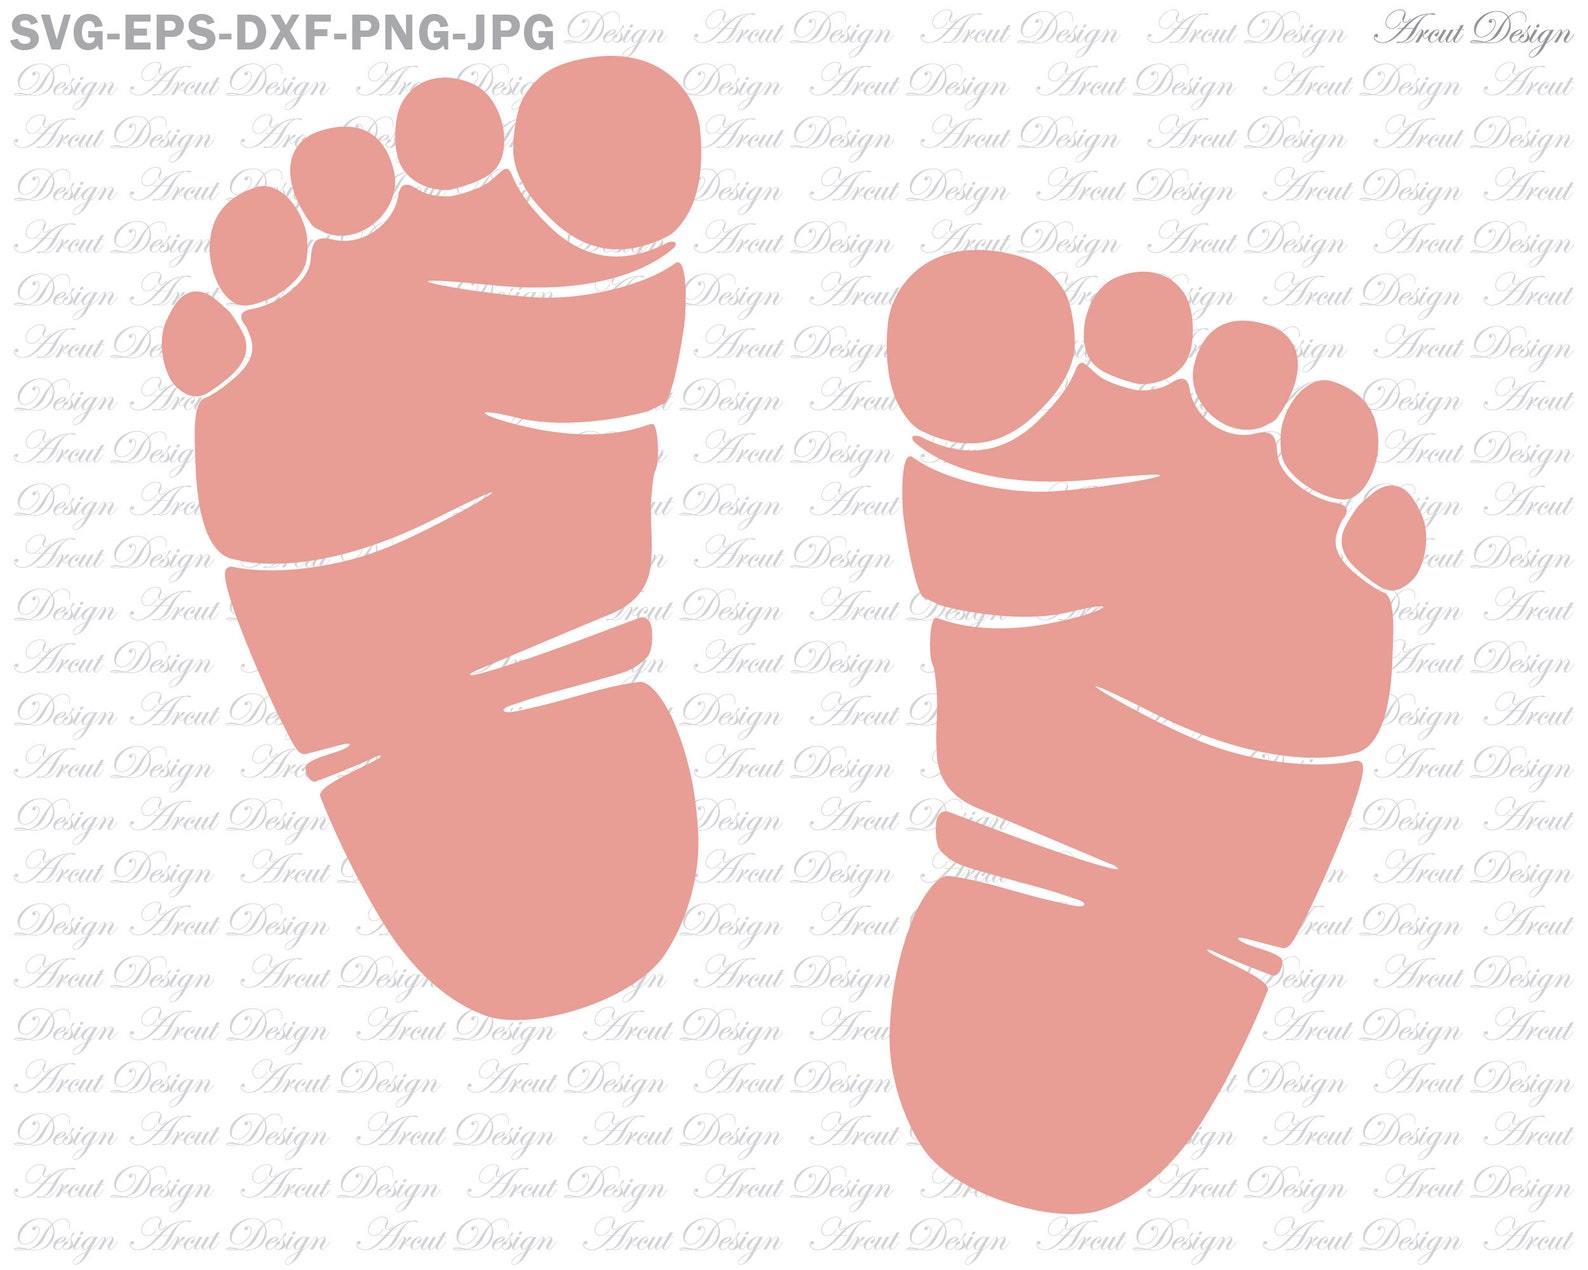 2. Adorable Baby Footprint Nail Art - wide 2